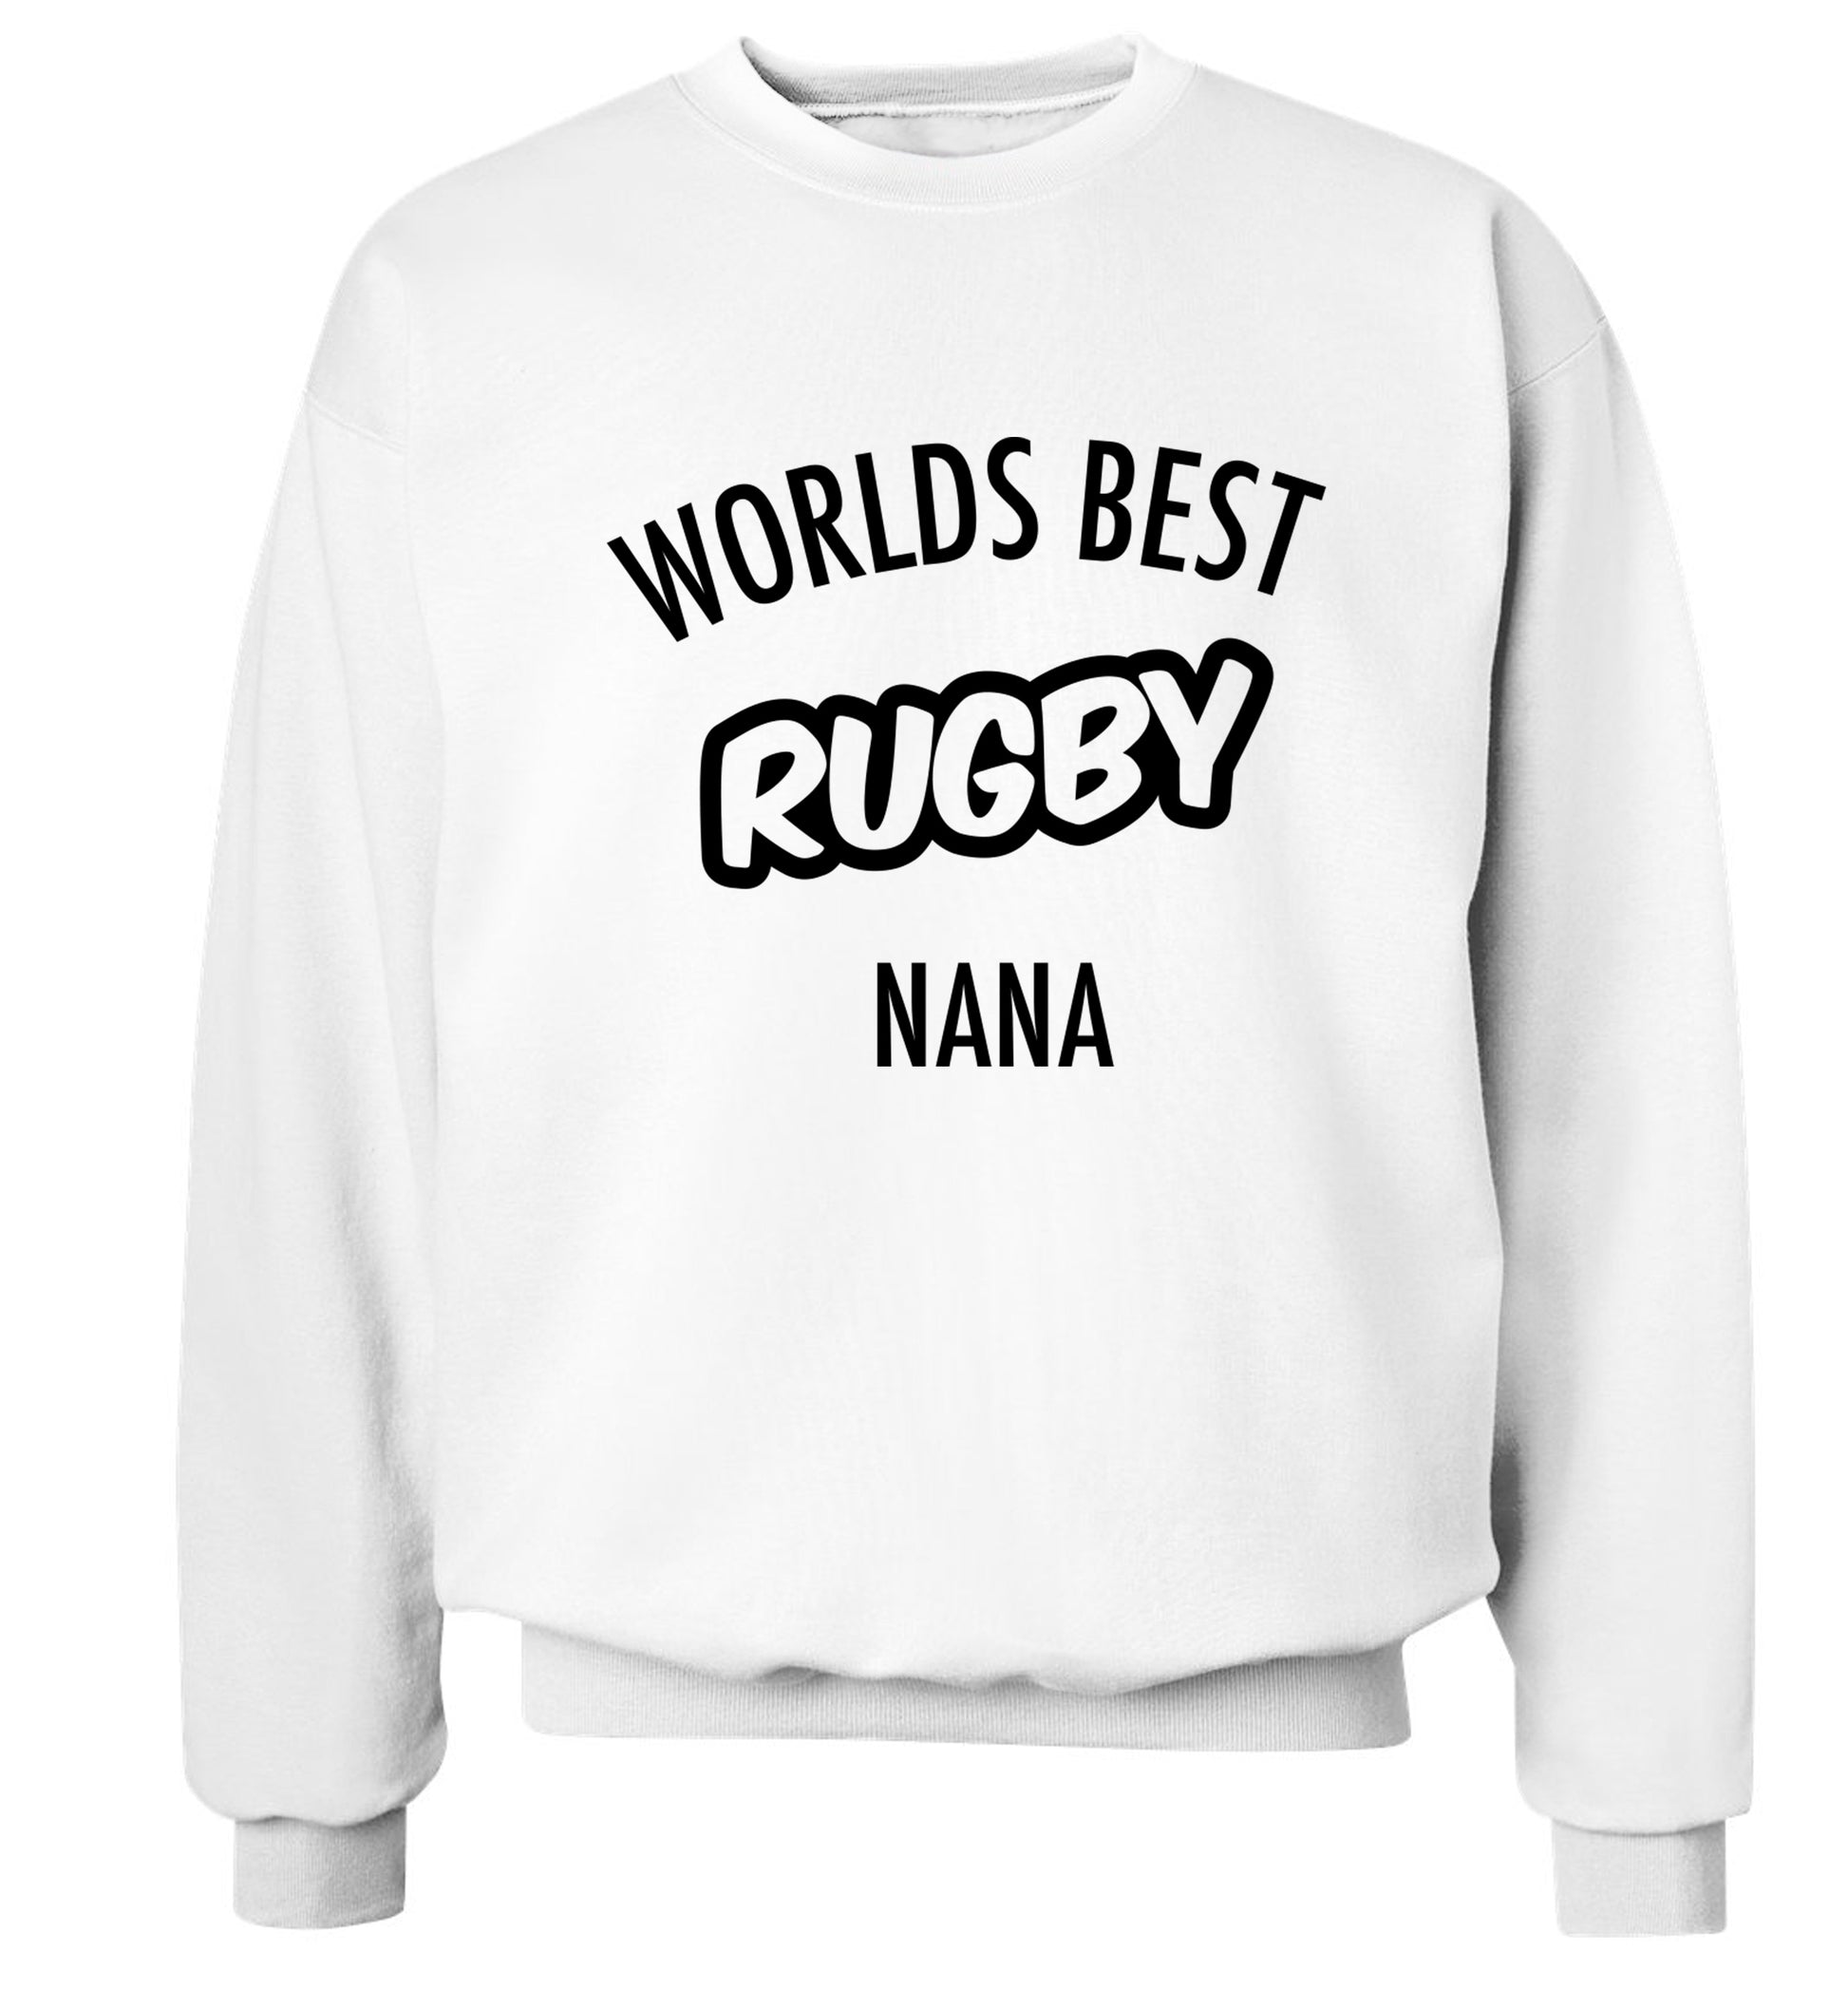 Worlds Best Rugby Grandma Adult's unisex white Sweater 2XL